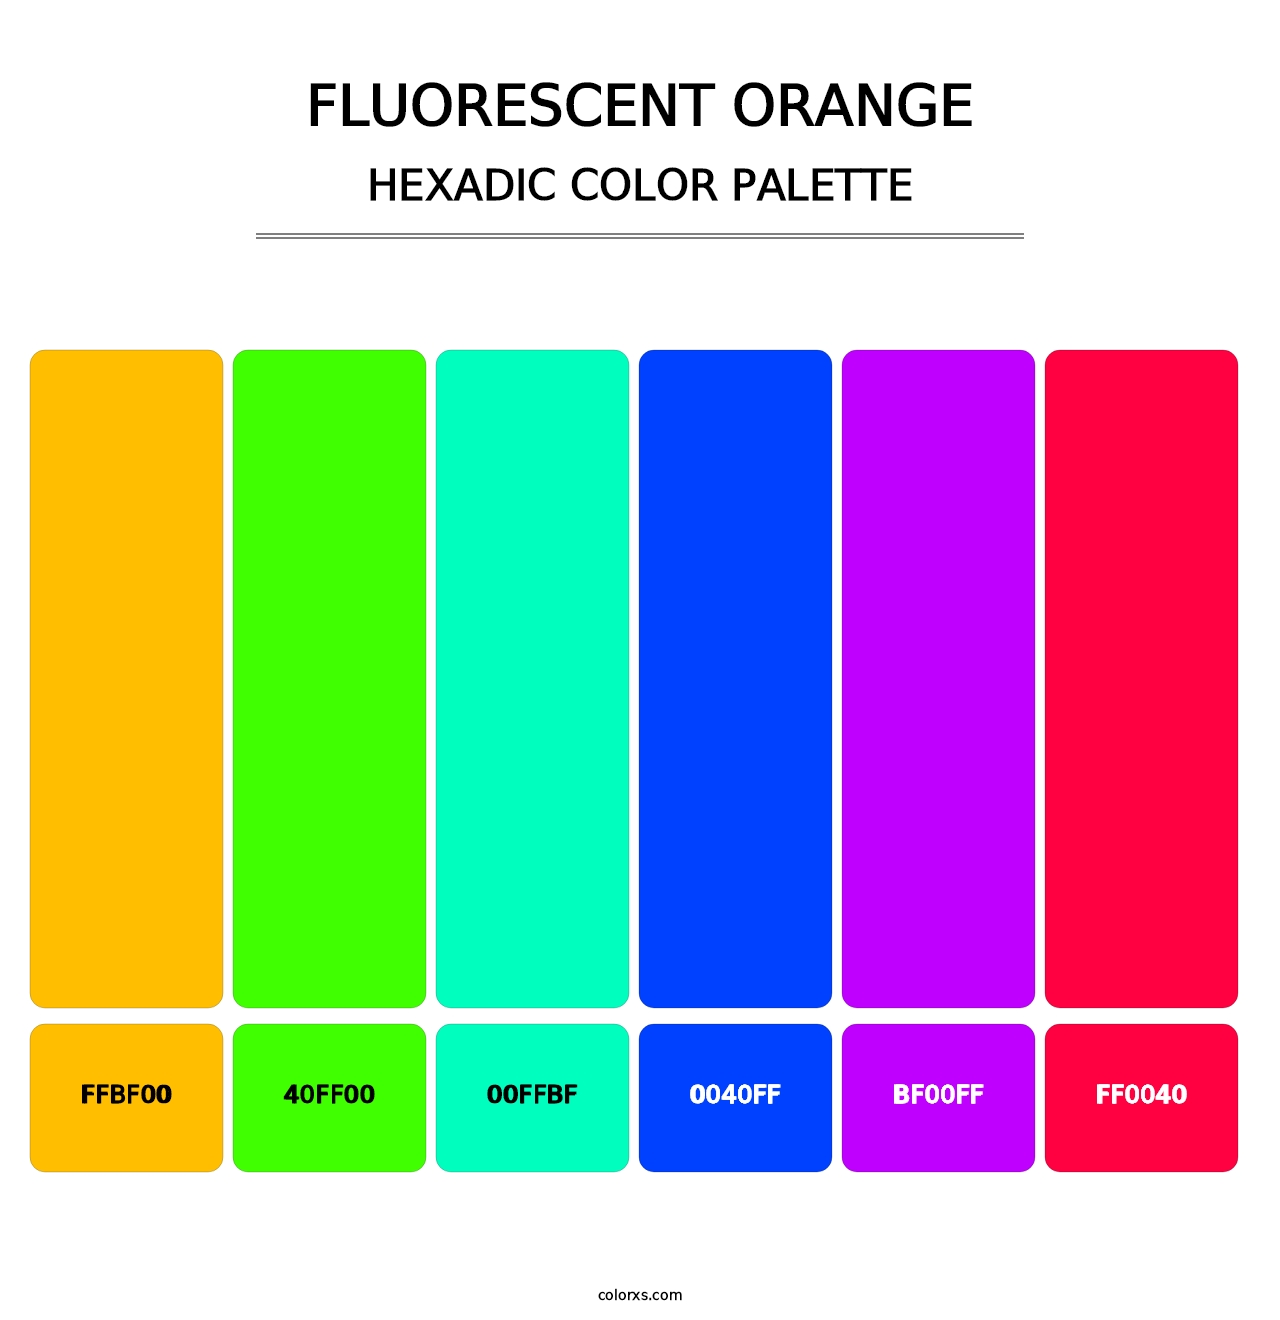 Fluorescent Orange - Hexadic Color Palette